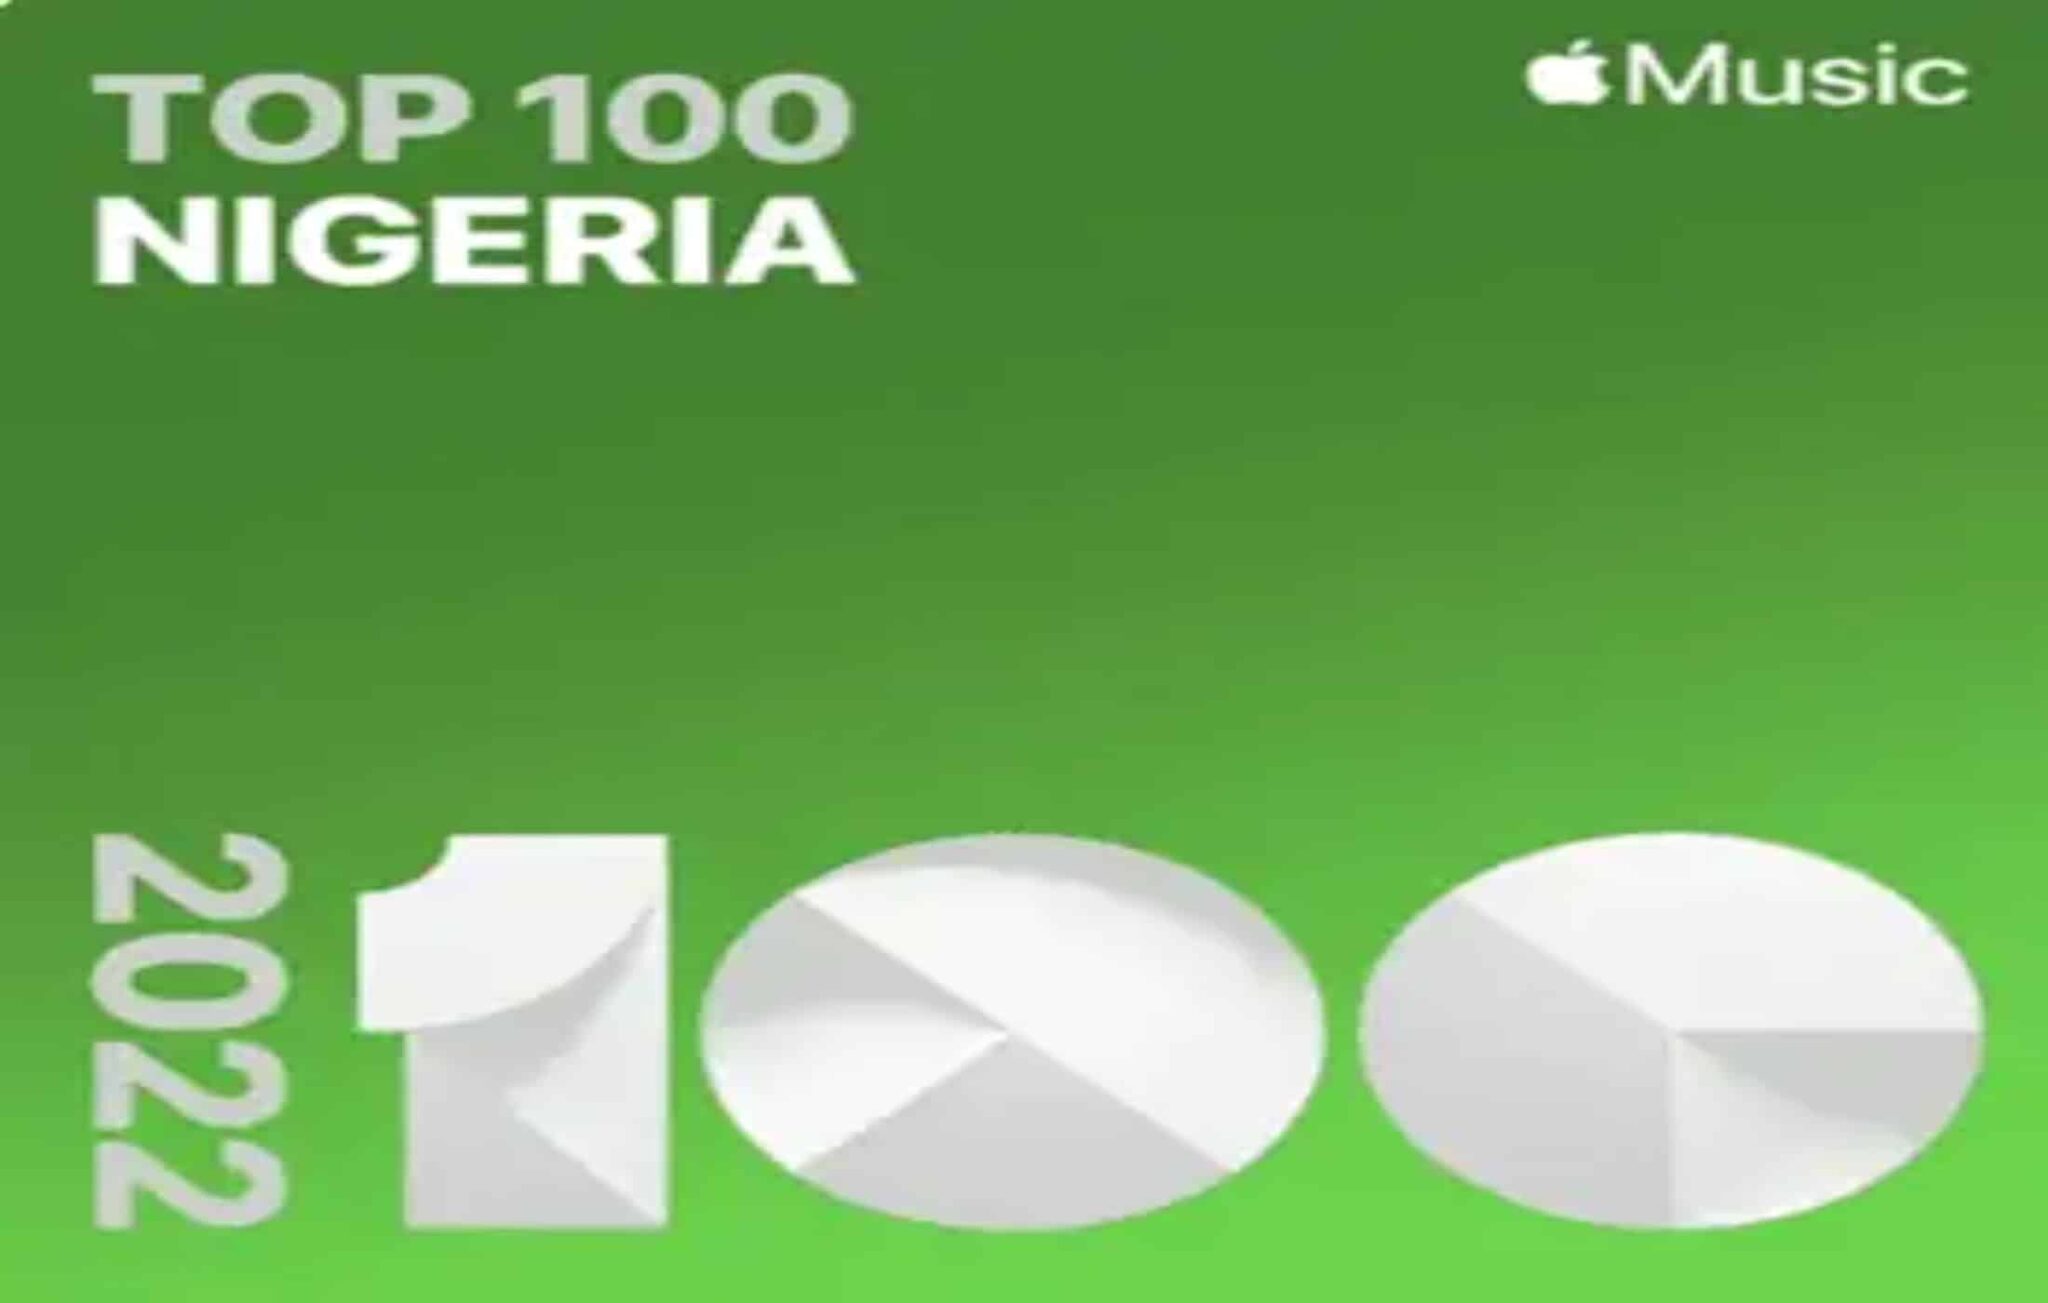 Top 100 Nigerian Songs 2022 Apple Music Kemi Filani News